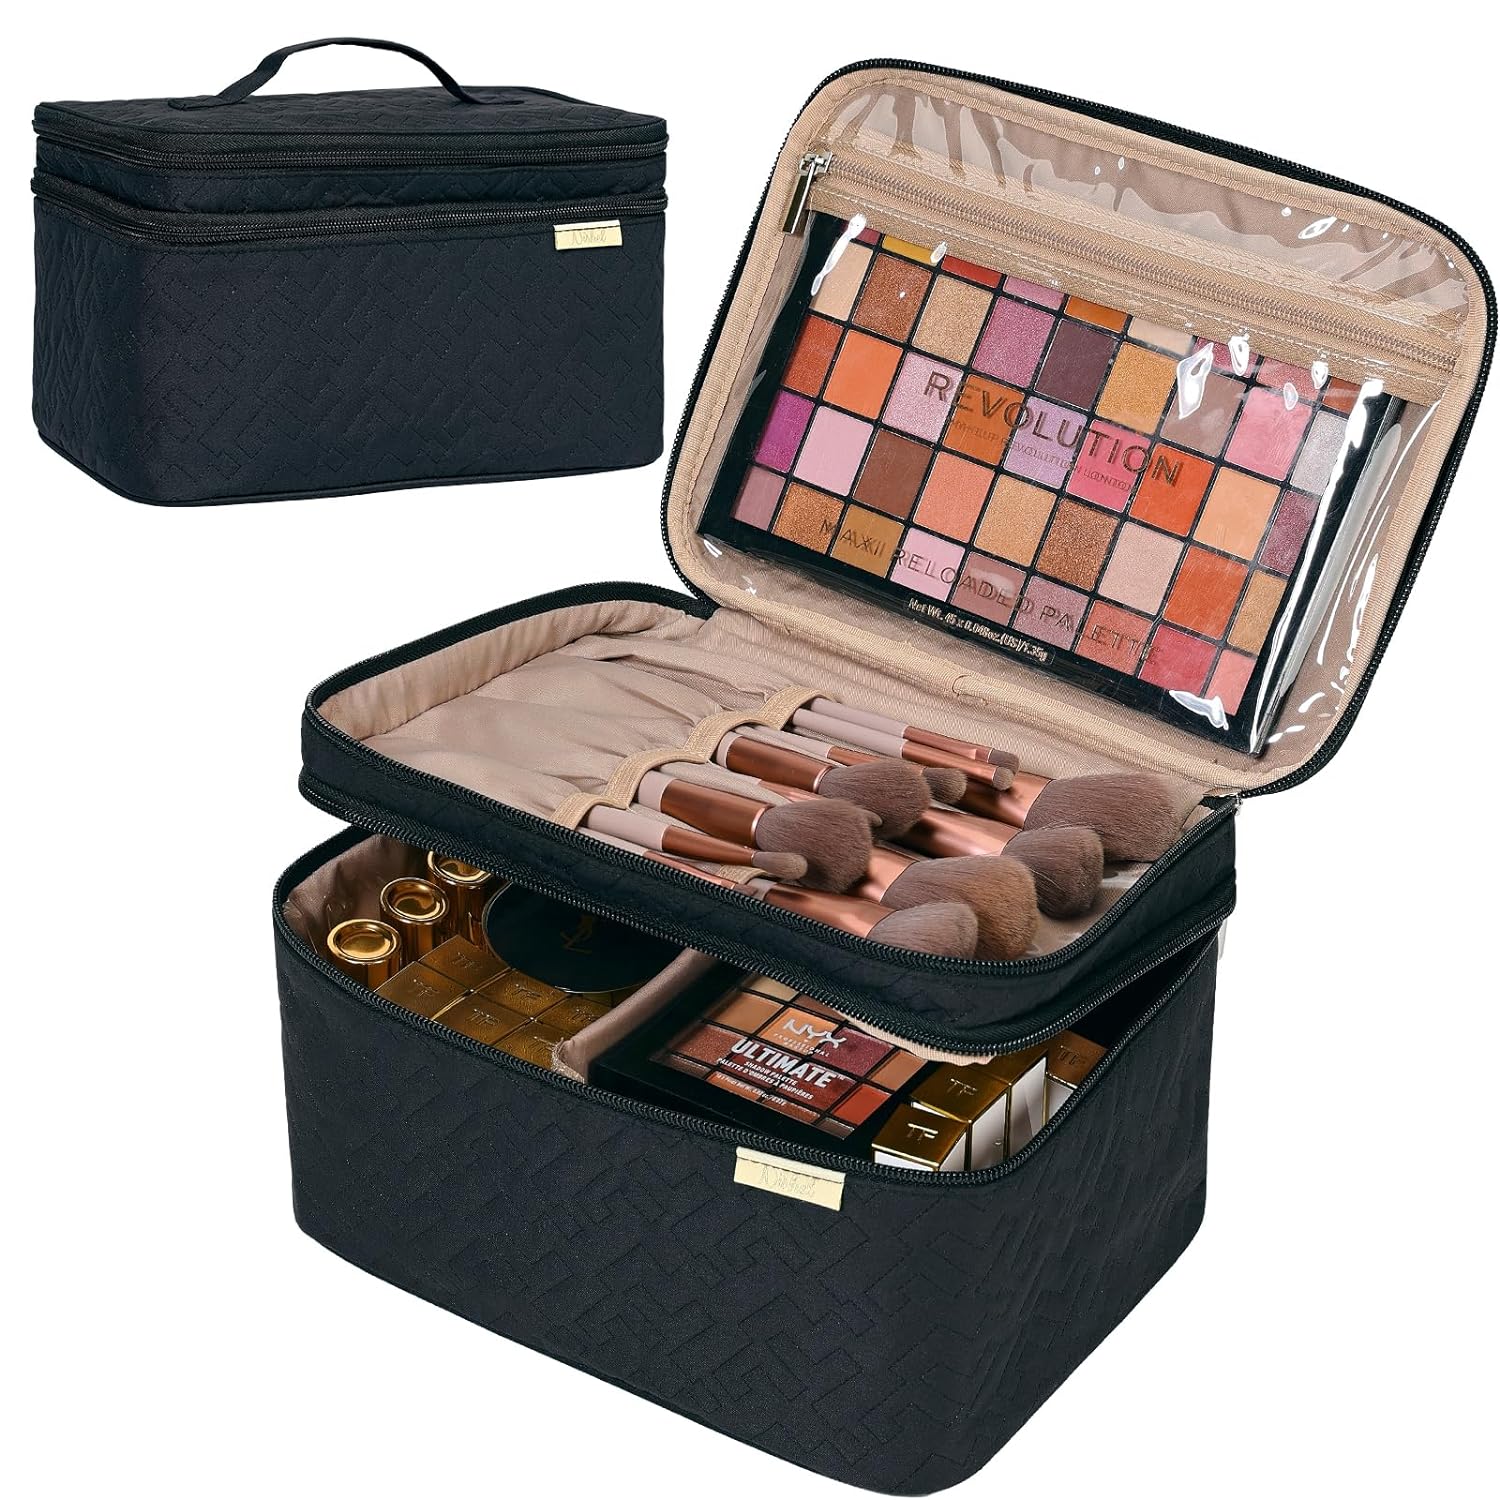  ZAUKNYA Makeup Bag - Large Capacity Travel Cosmetic